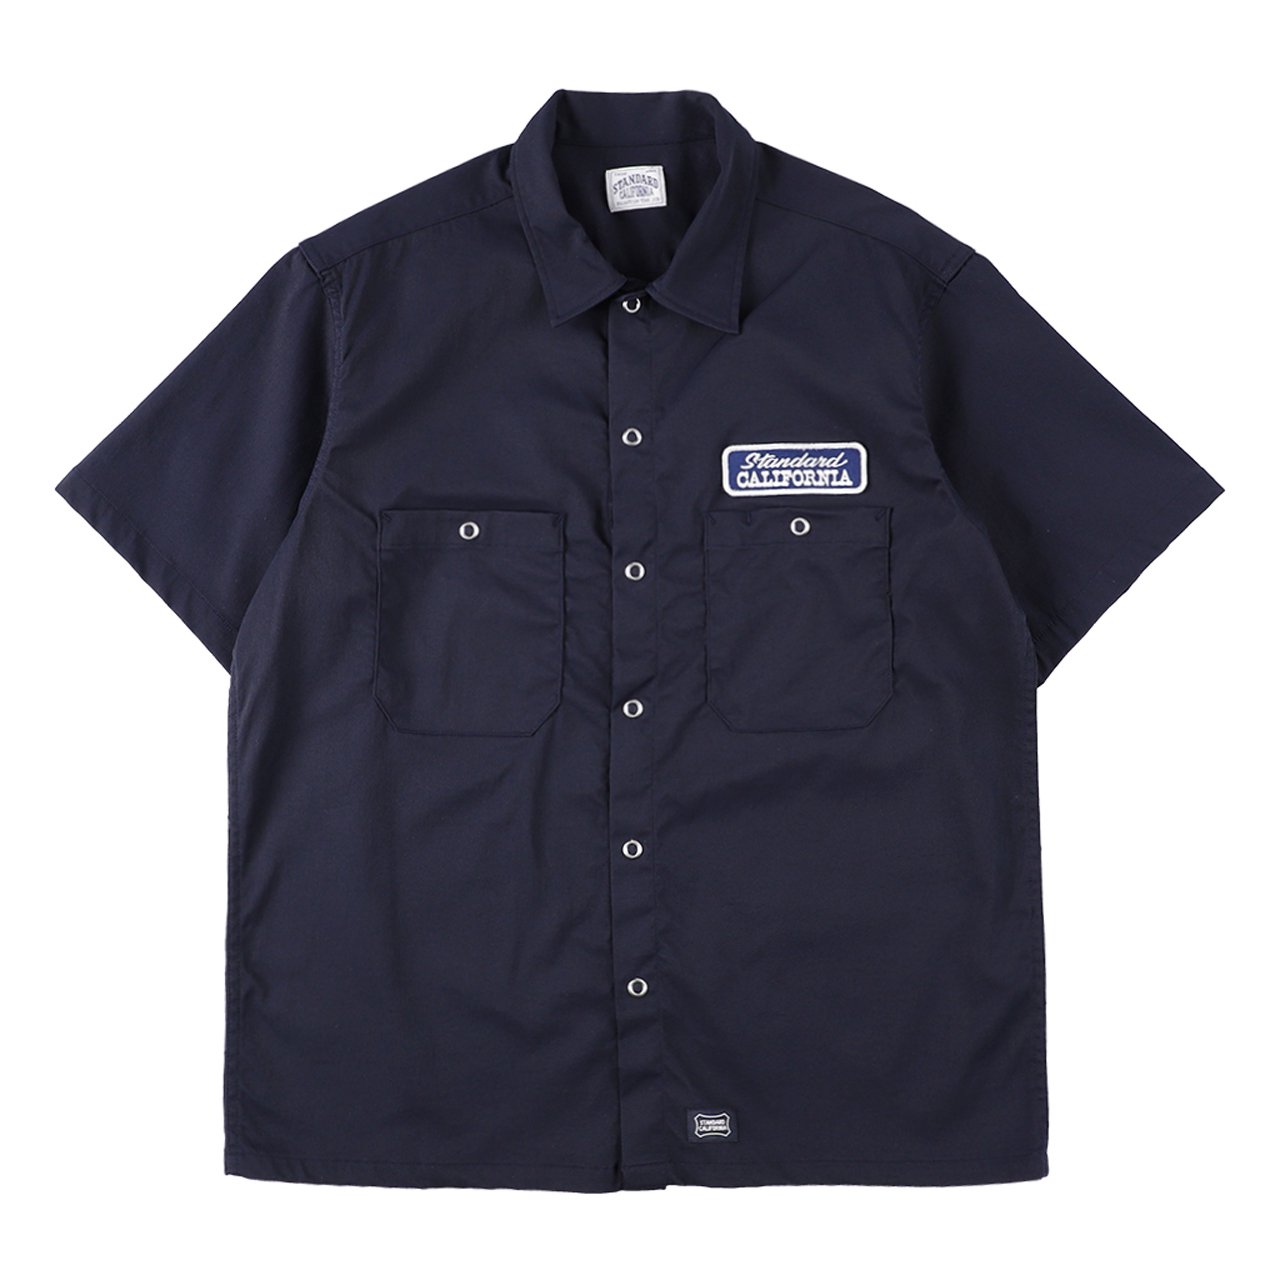 STANDARD CALIFORNIA(スタンダードカリフォルニア)24SS/春夏
Logo Patch Easy Work Shirt S/S
SHOSA200 
半袖シャツ
ワークシャツ
